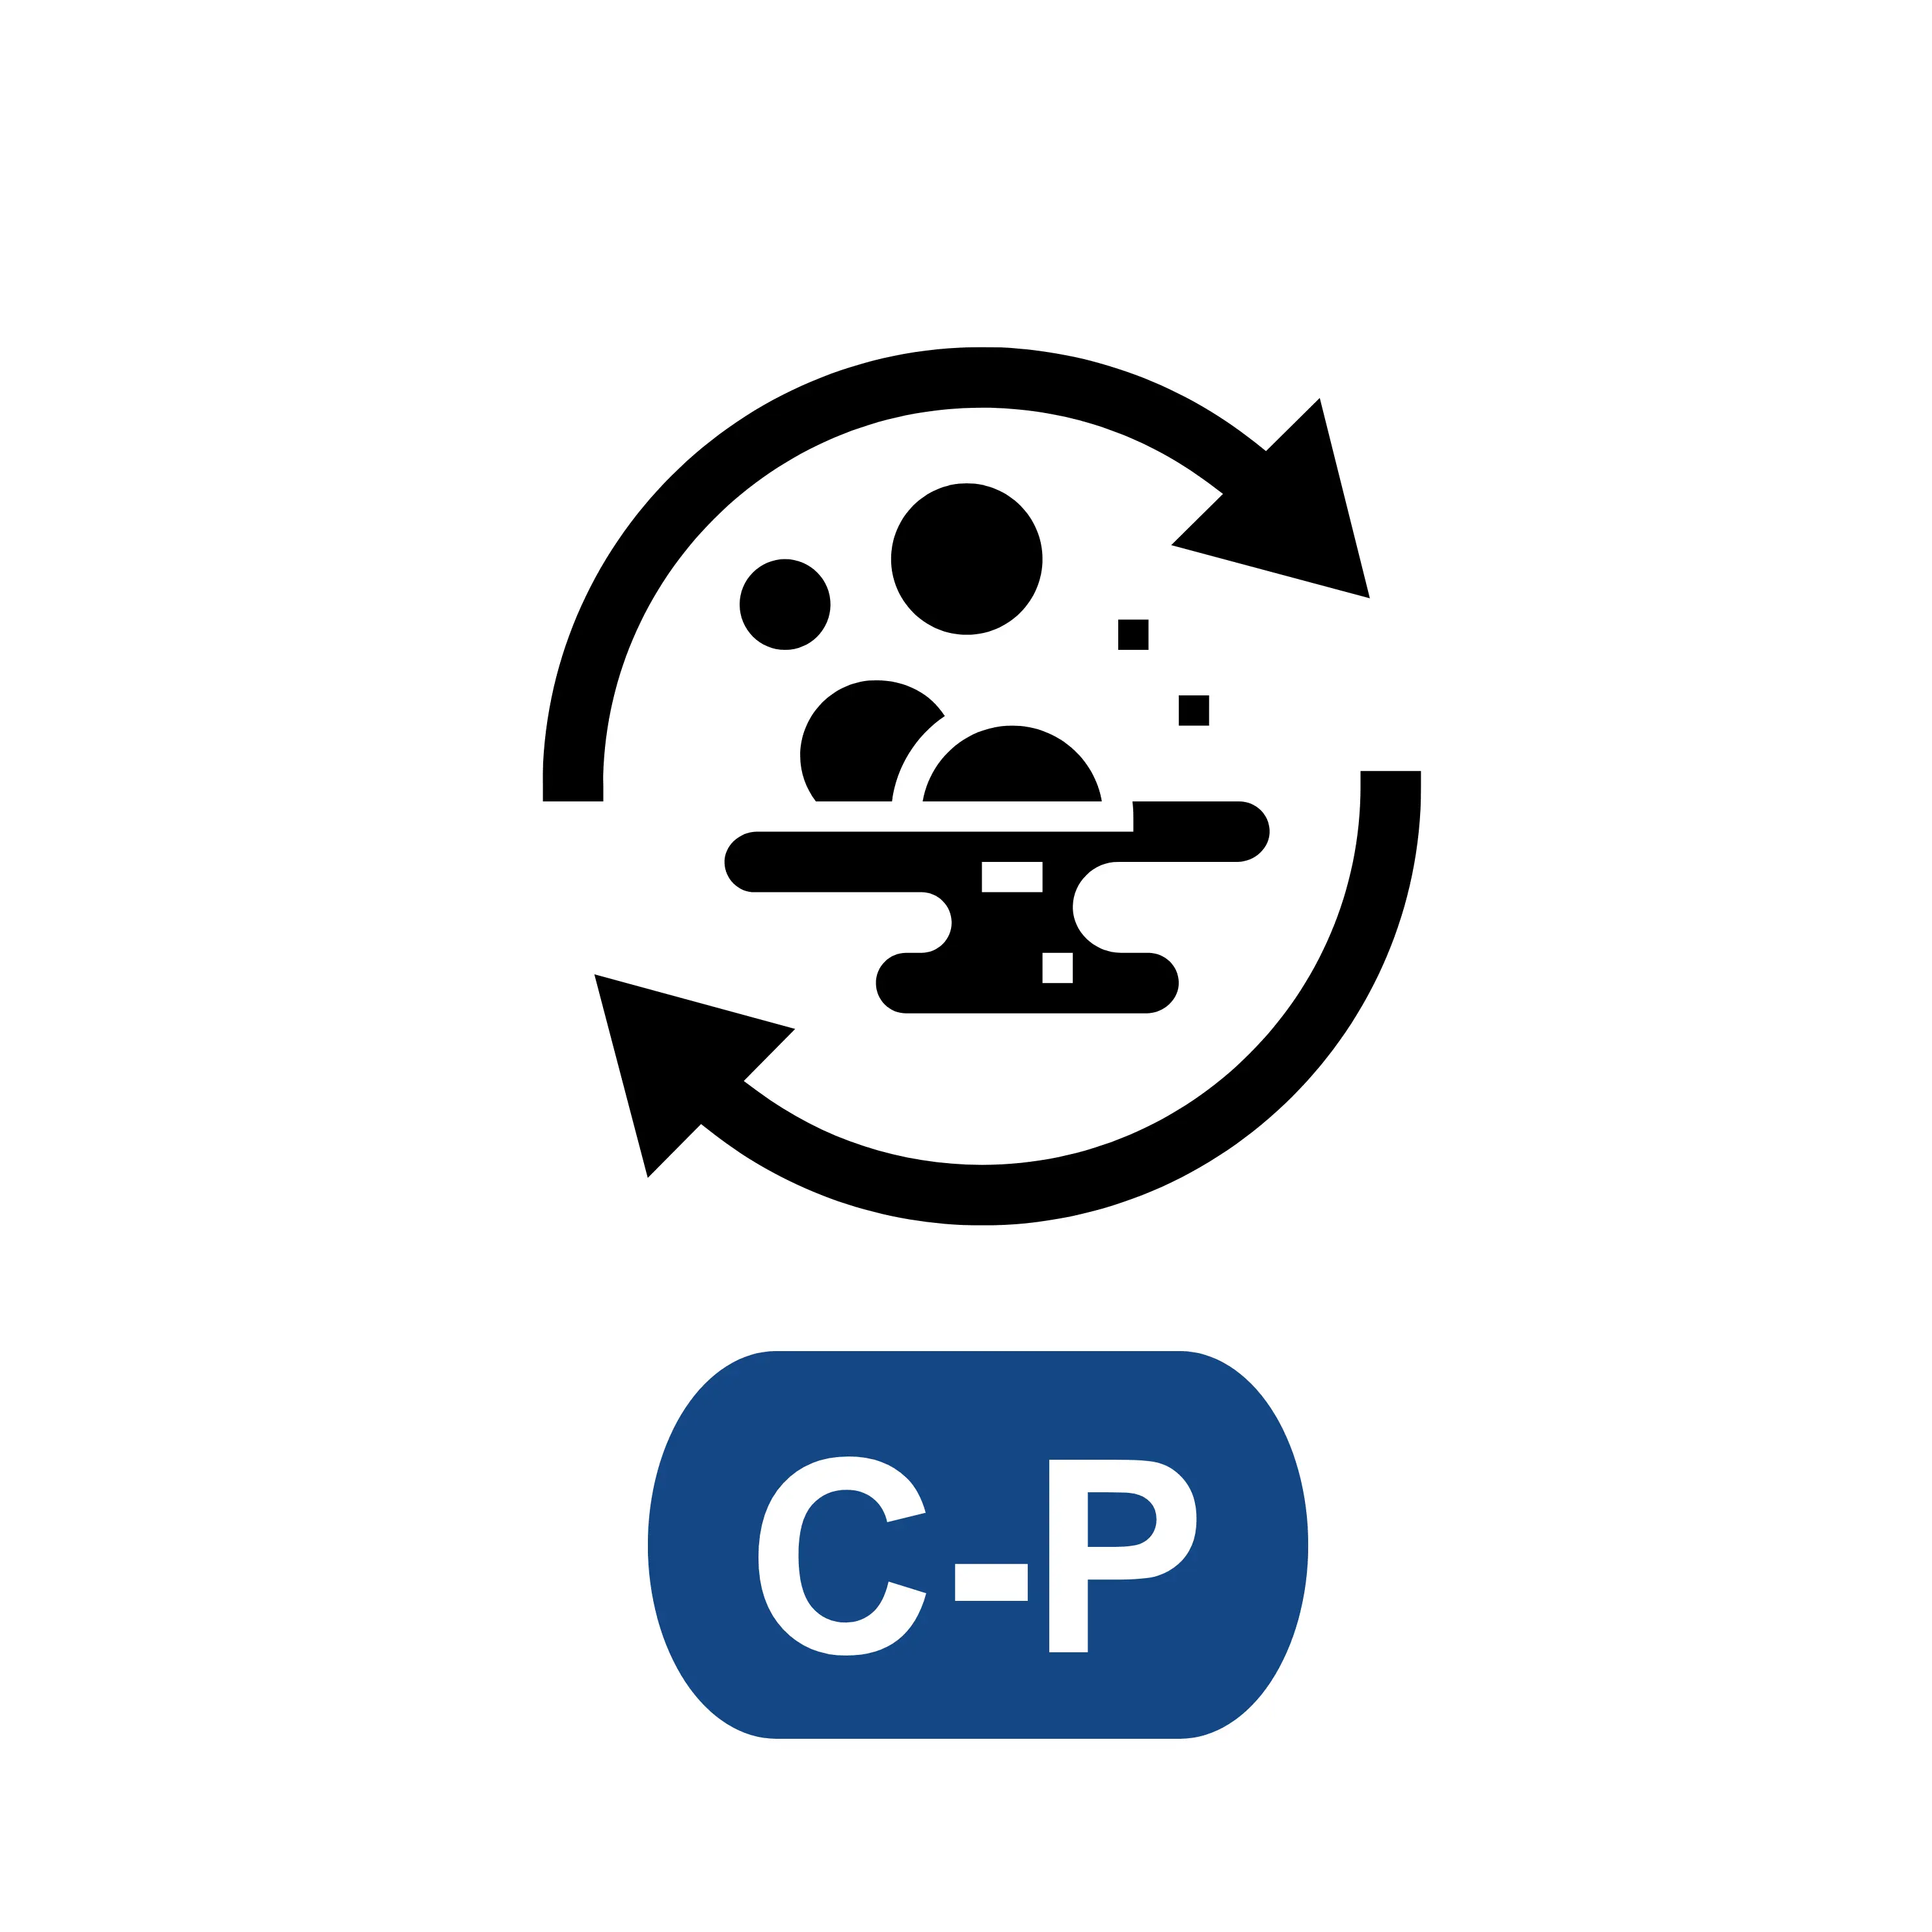 C-Peptide